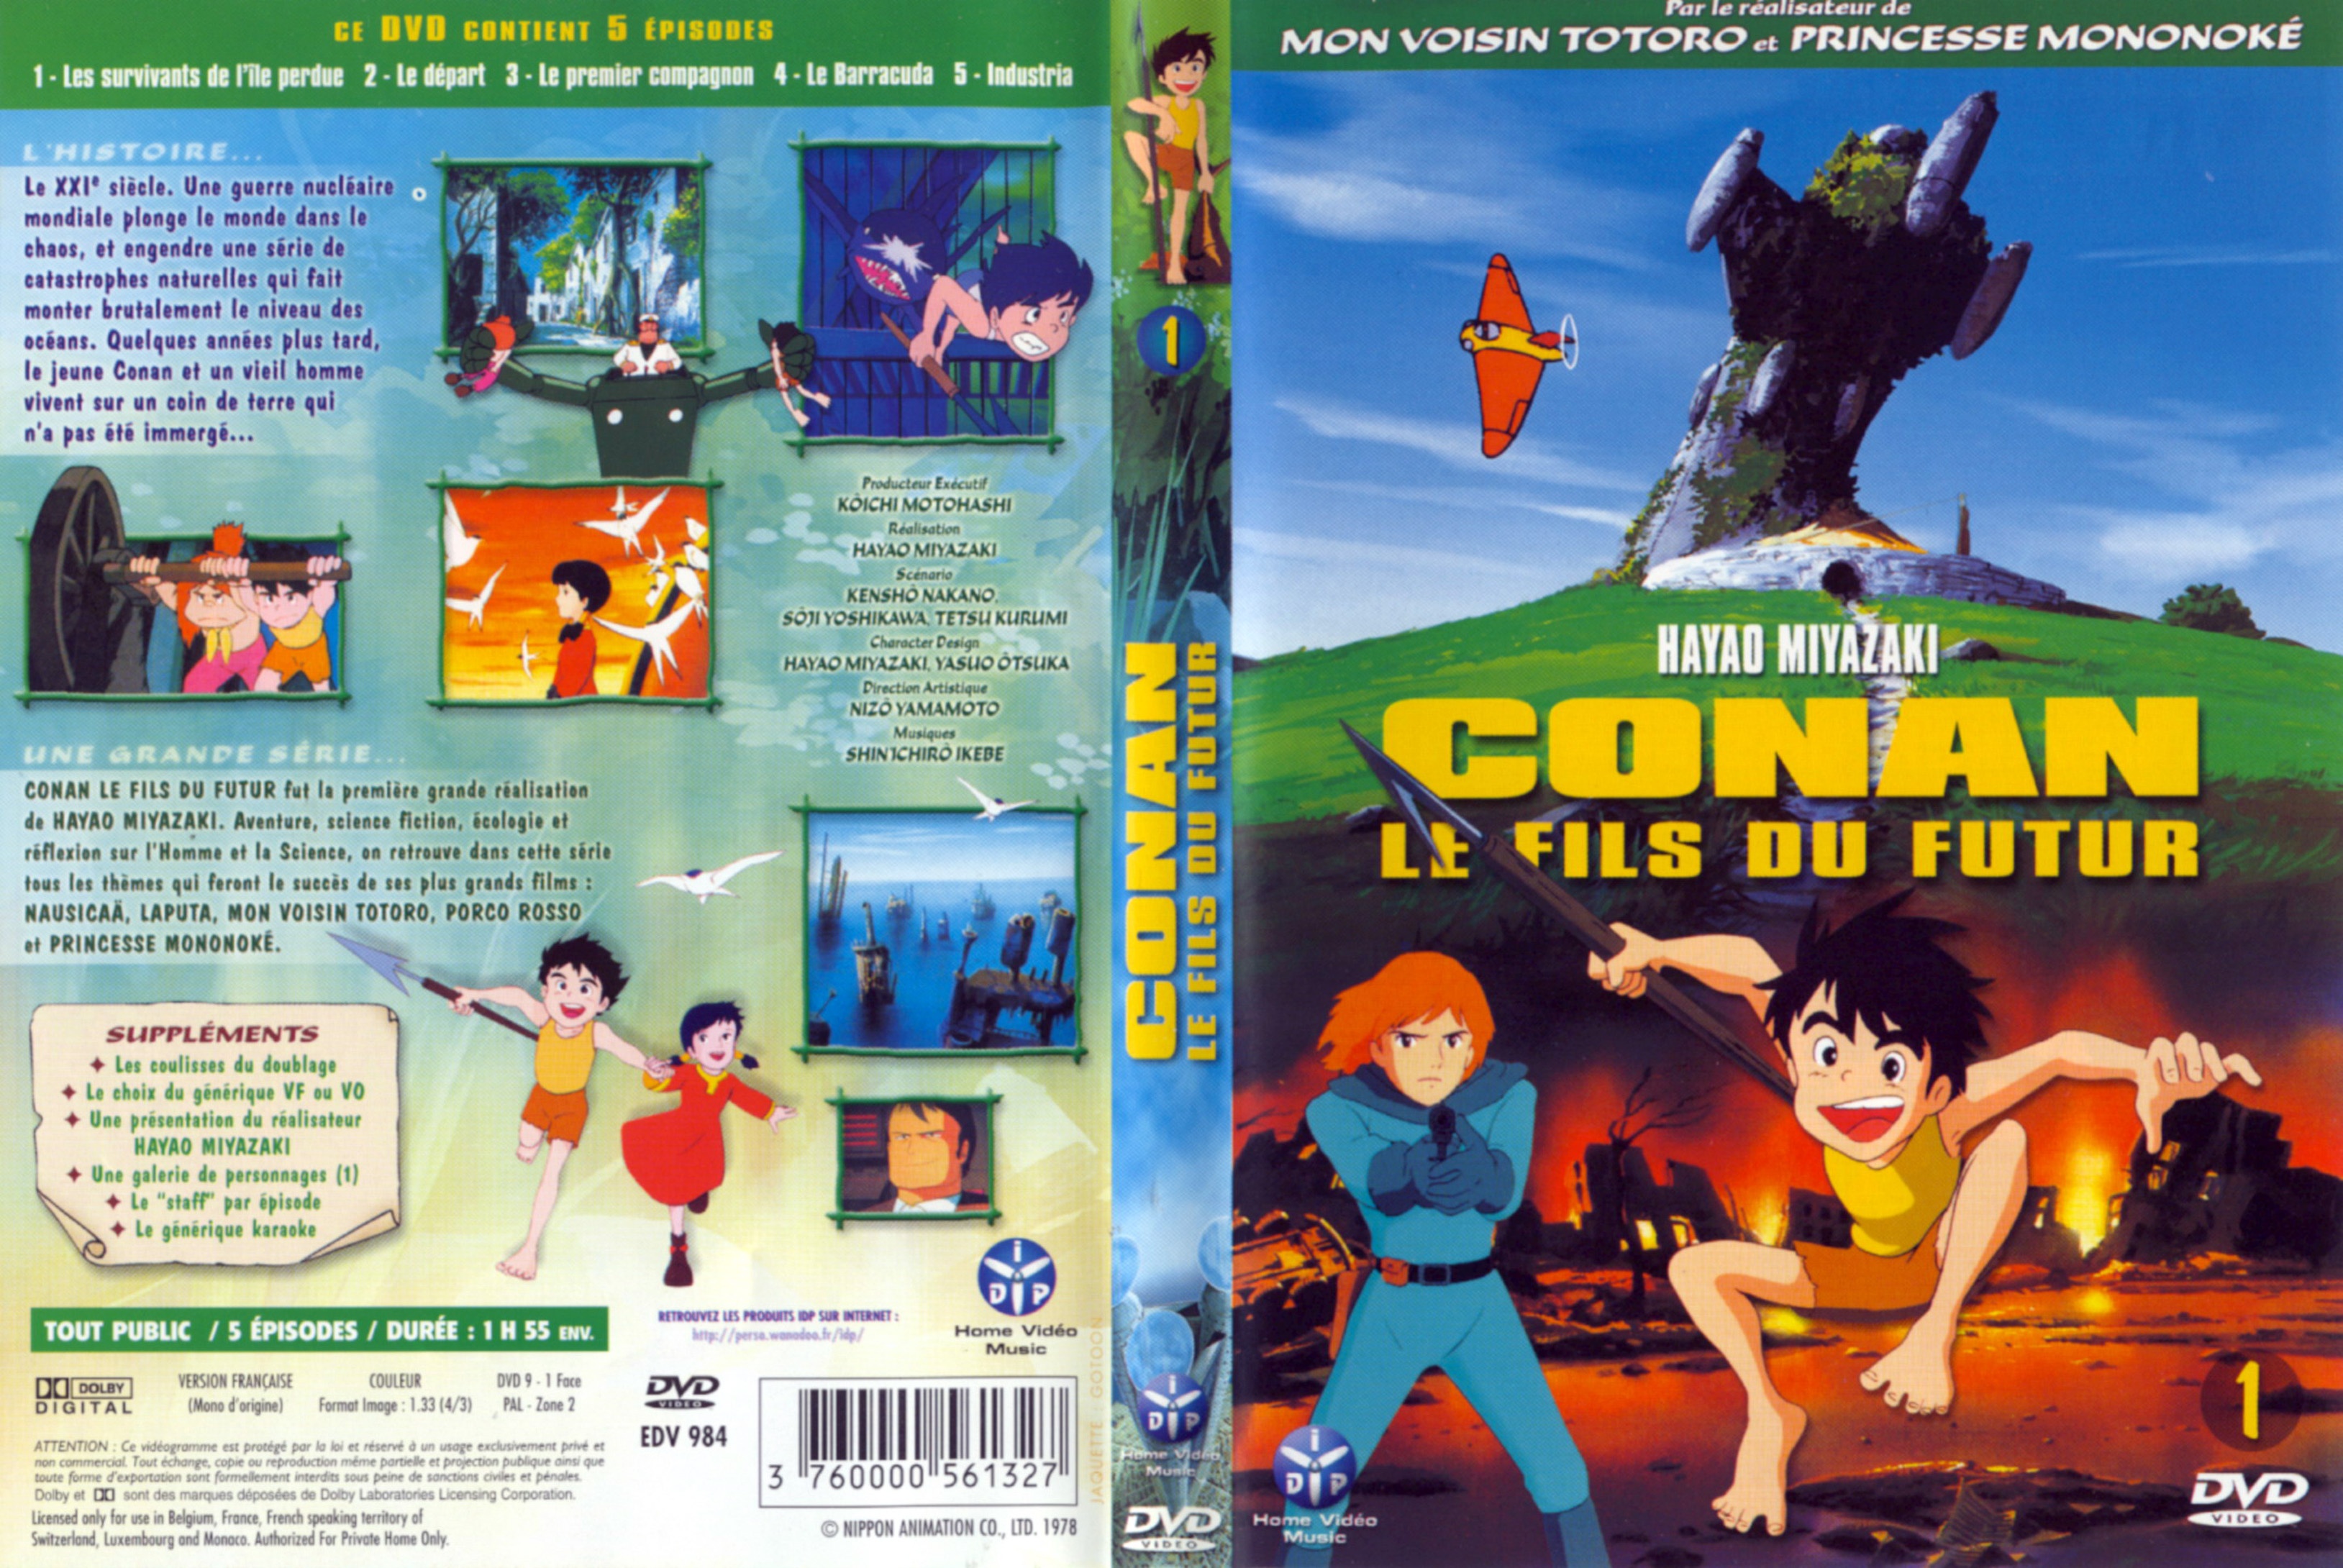 Jaquette DVD Conan le fils du futur vol 1